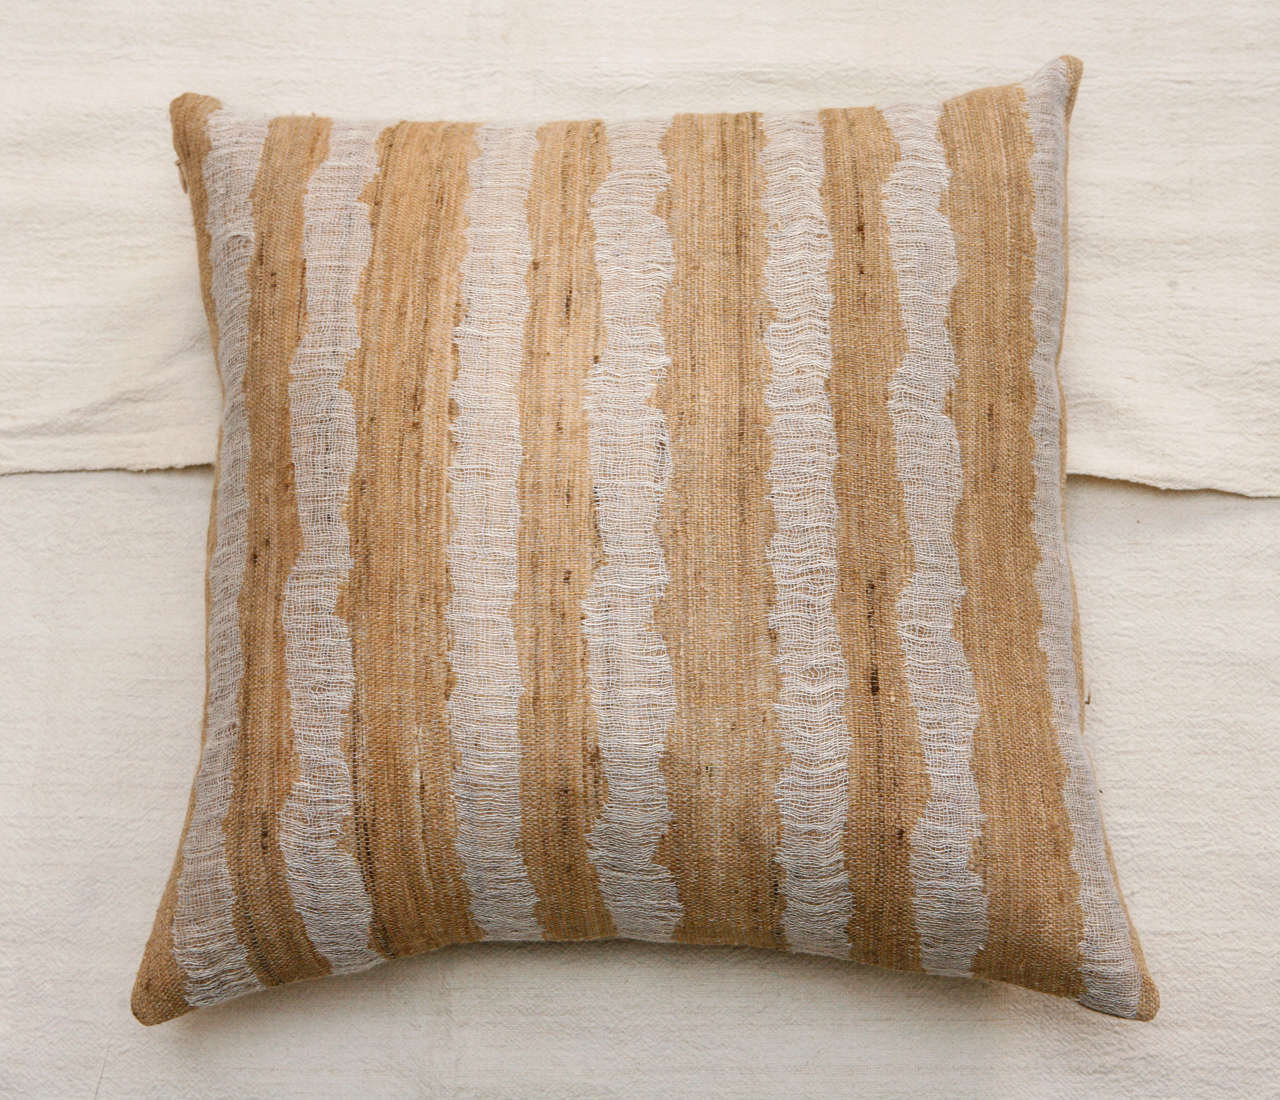 Contemporary Indian Raw Tusser Silk & Linen Pillows.